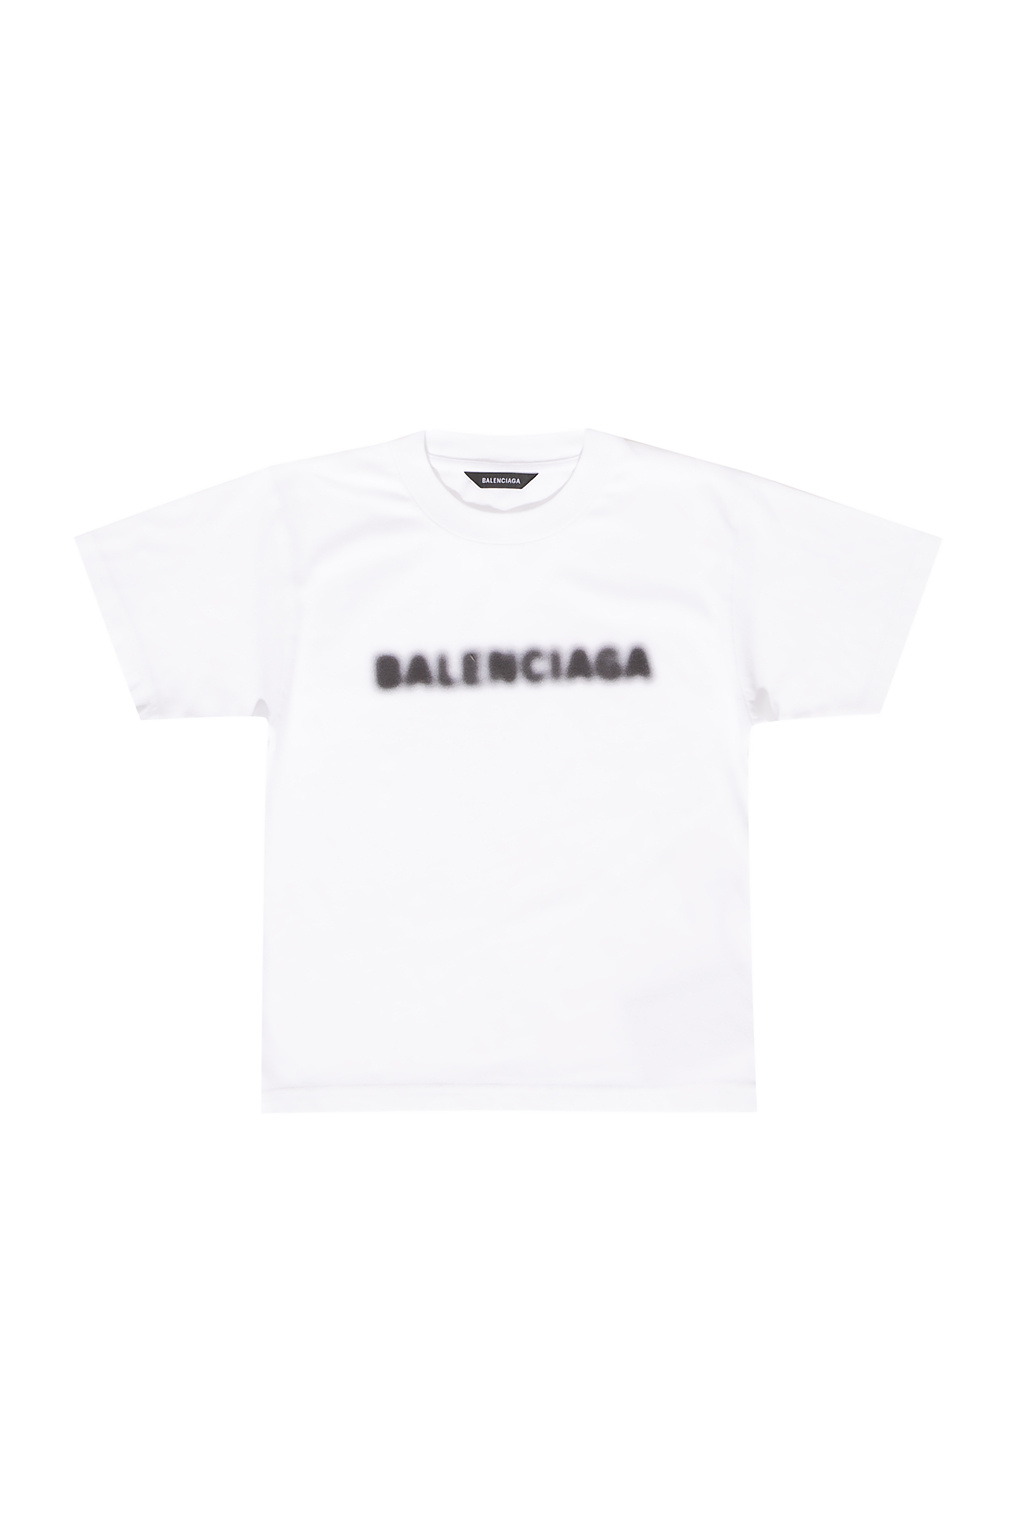 Square White T Balenciaga Kids Logo zwart hoodie - RIPNDIP Up Kuwait shirt - StclaircomoShops - printed in -